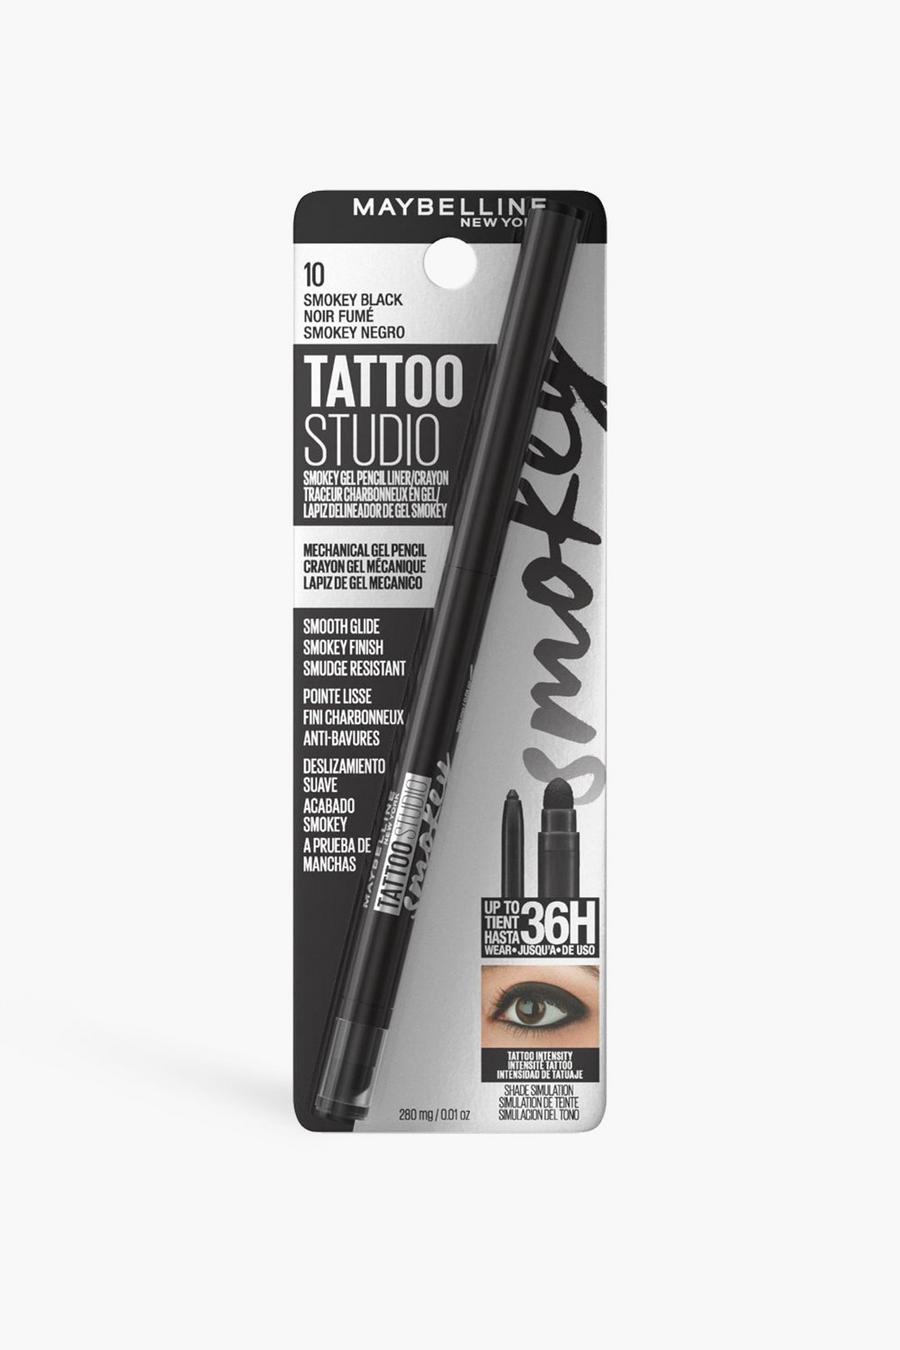 10 smokey black Maybelline Tattoo Liner Smoke Gel  